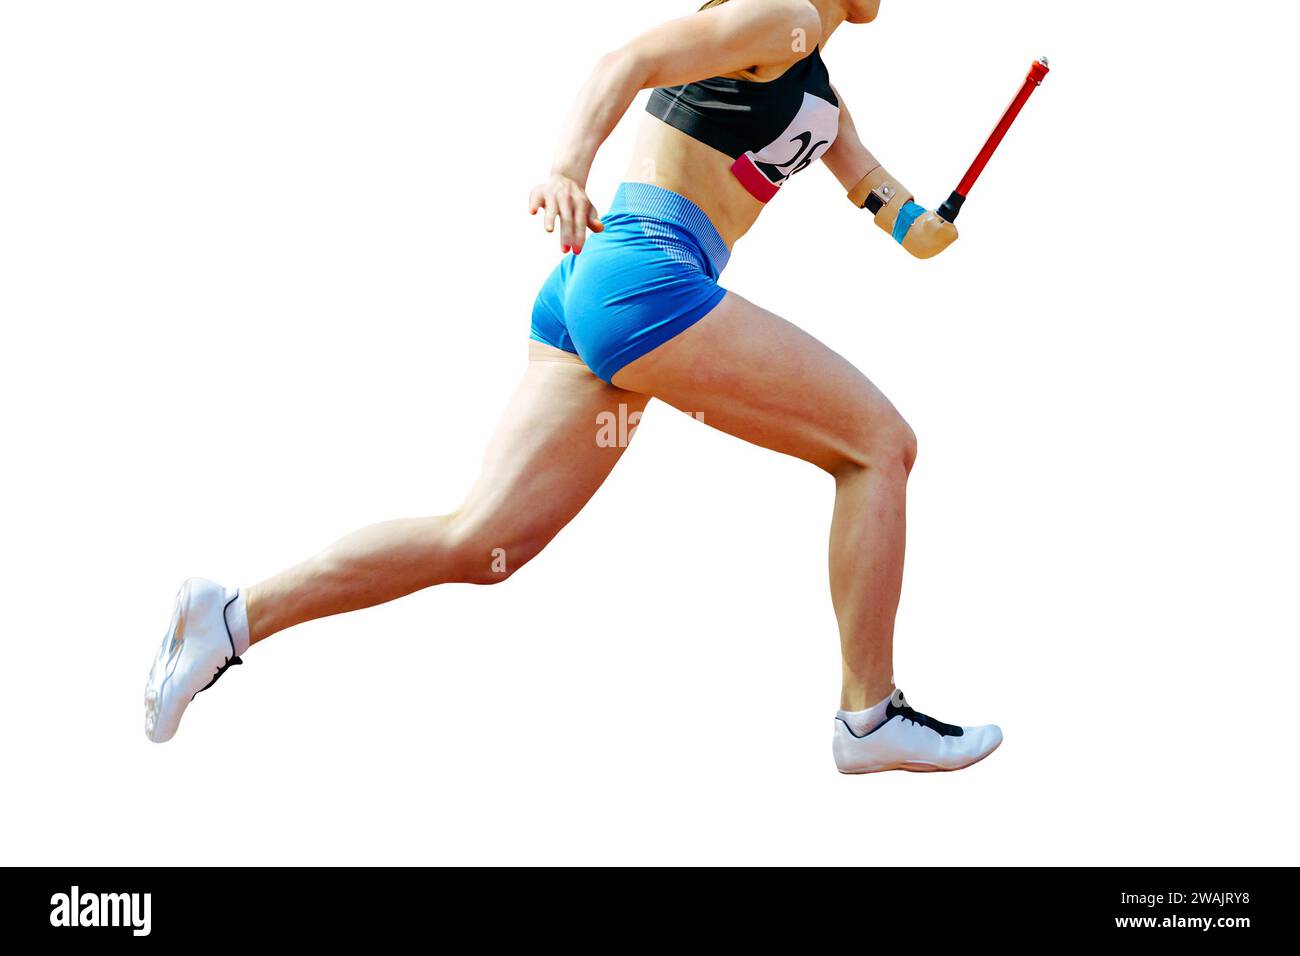 woman para athlete on prosthetic left hand running isolated on white background, summer para athletics games Stock Photo